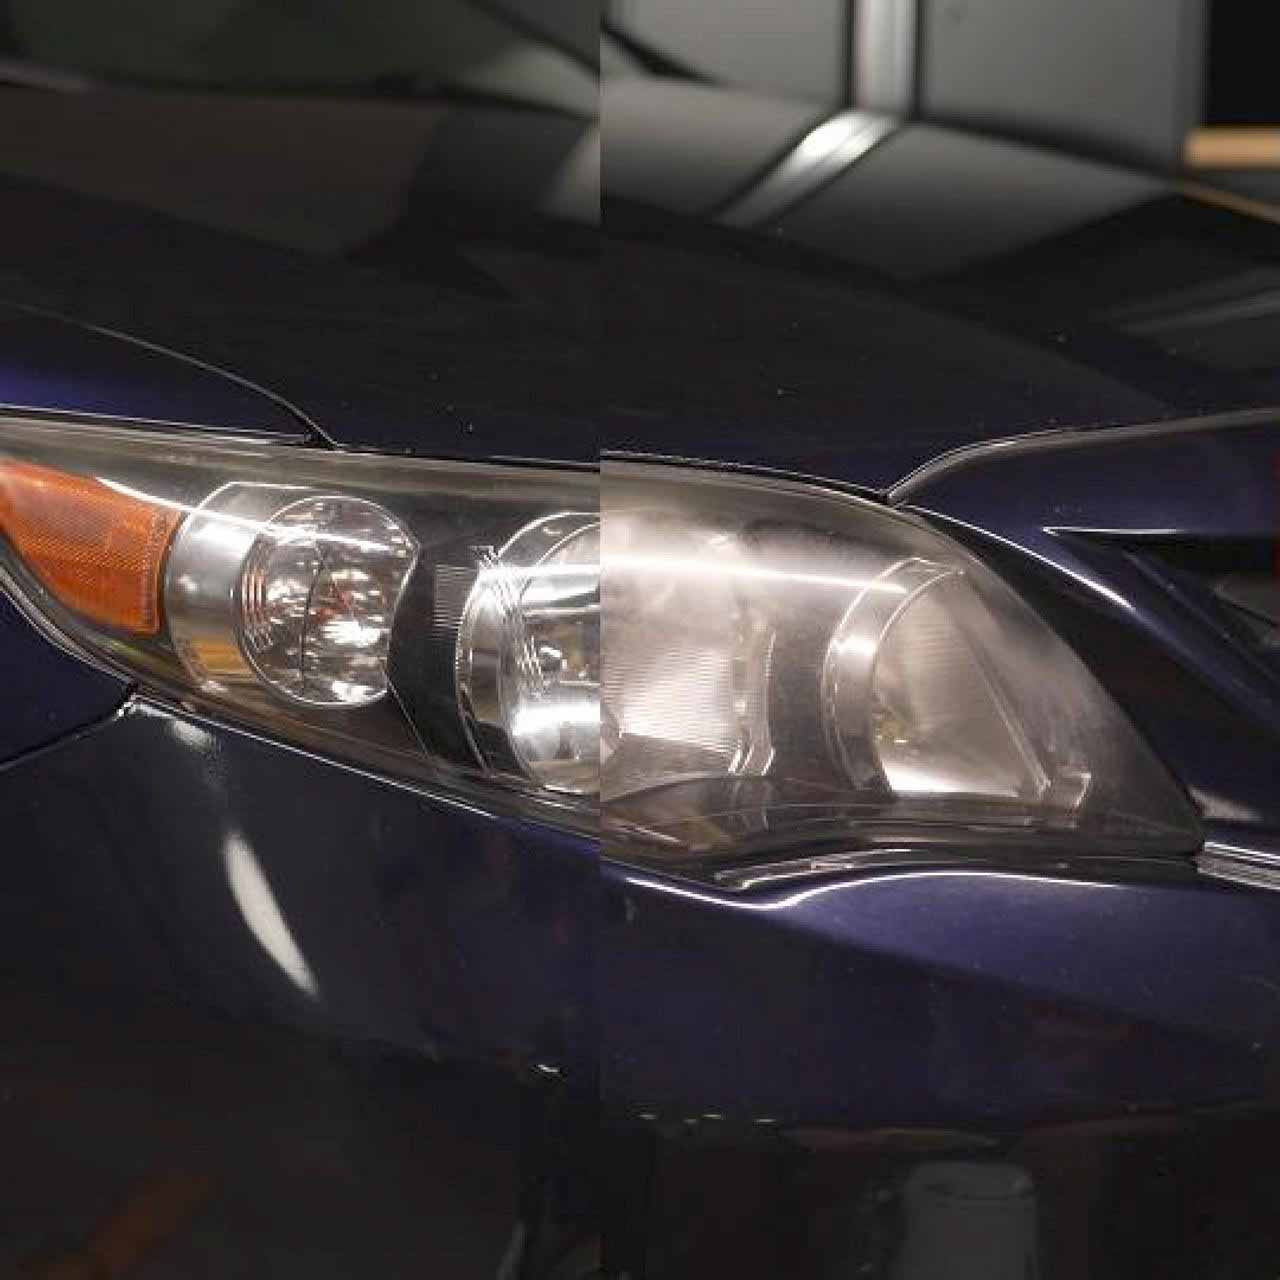 Car Headlight Restoration Kit Headlight Polishing Kit Car Light